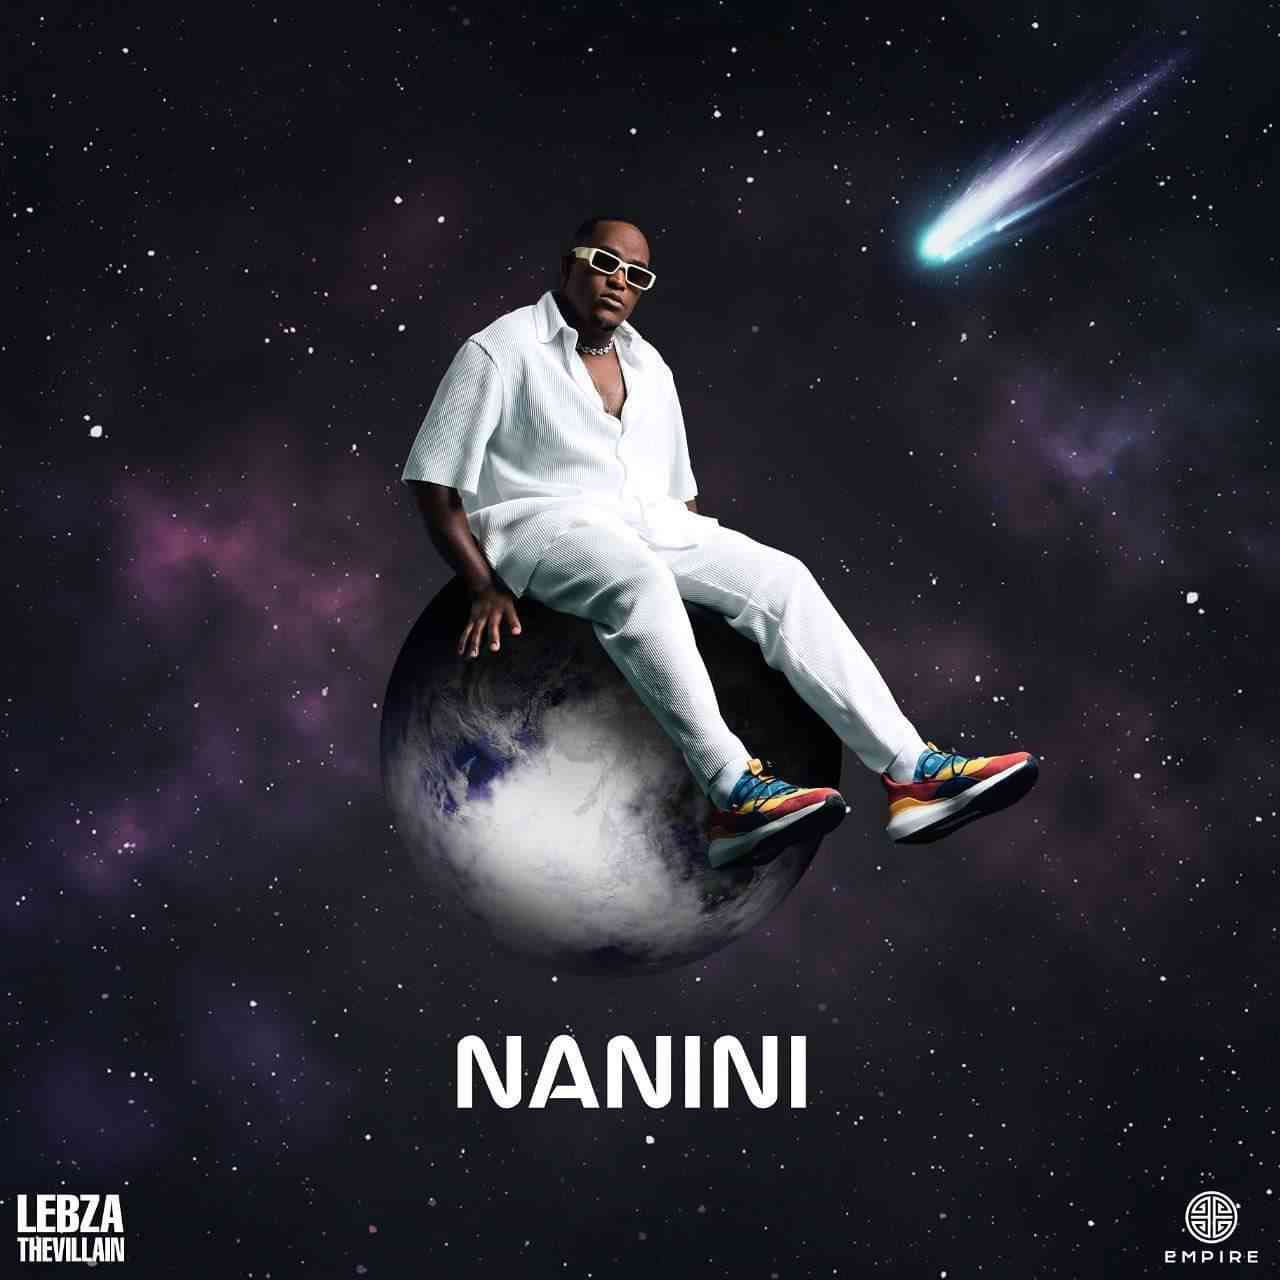 Lebza TheVillain Reveals Artwork For NANINI EP